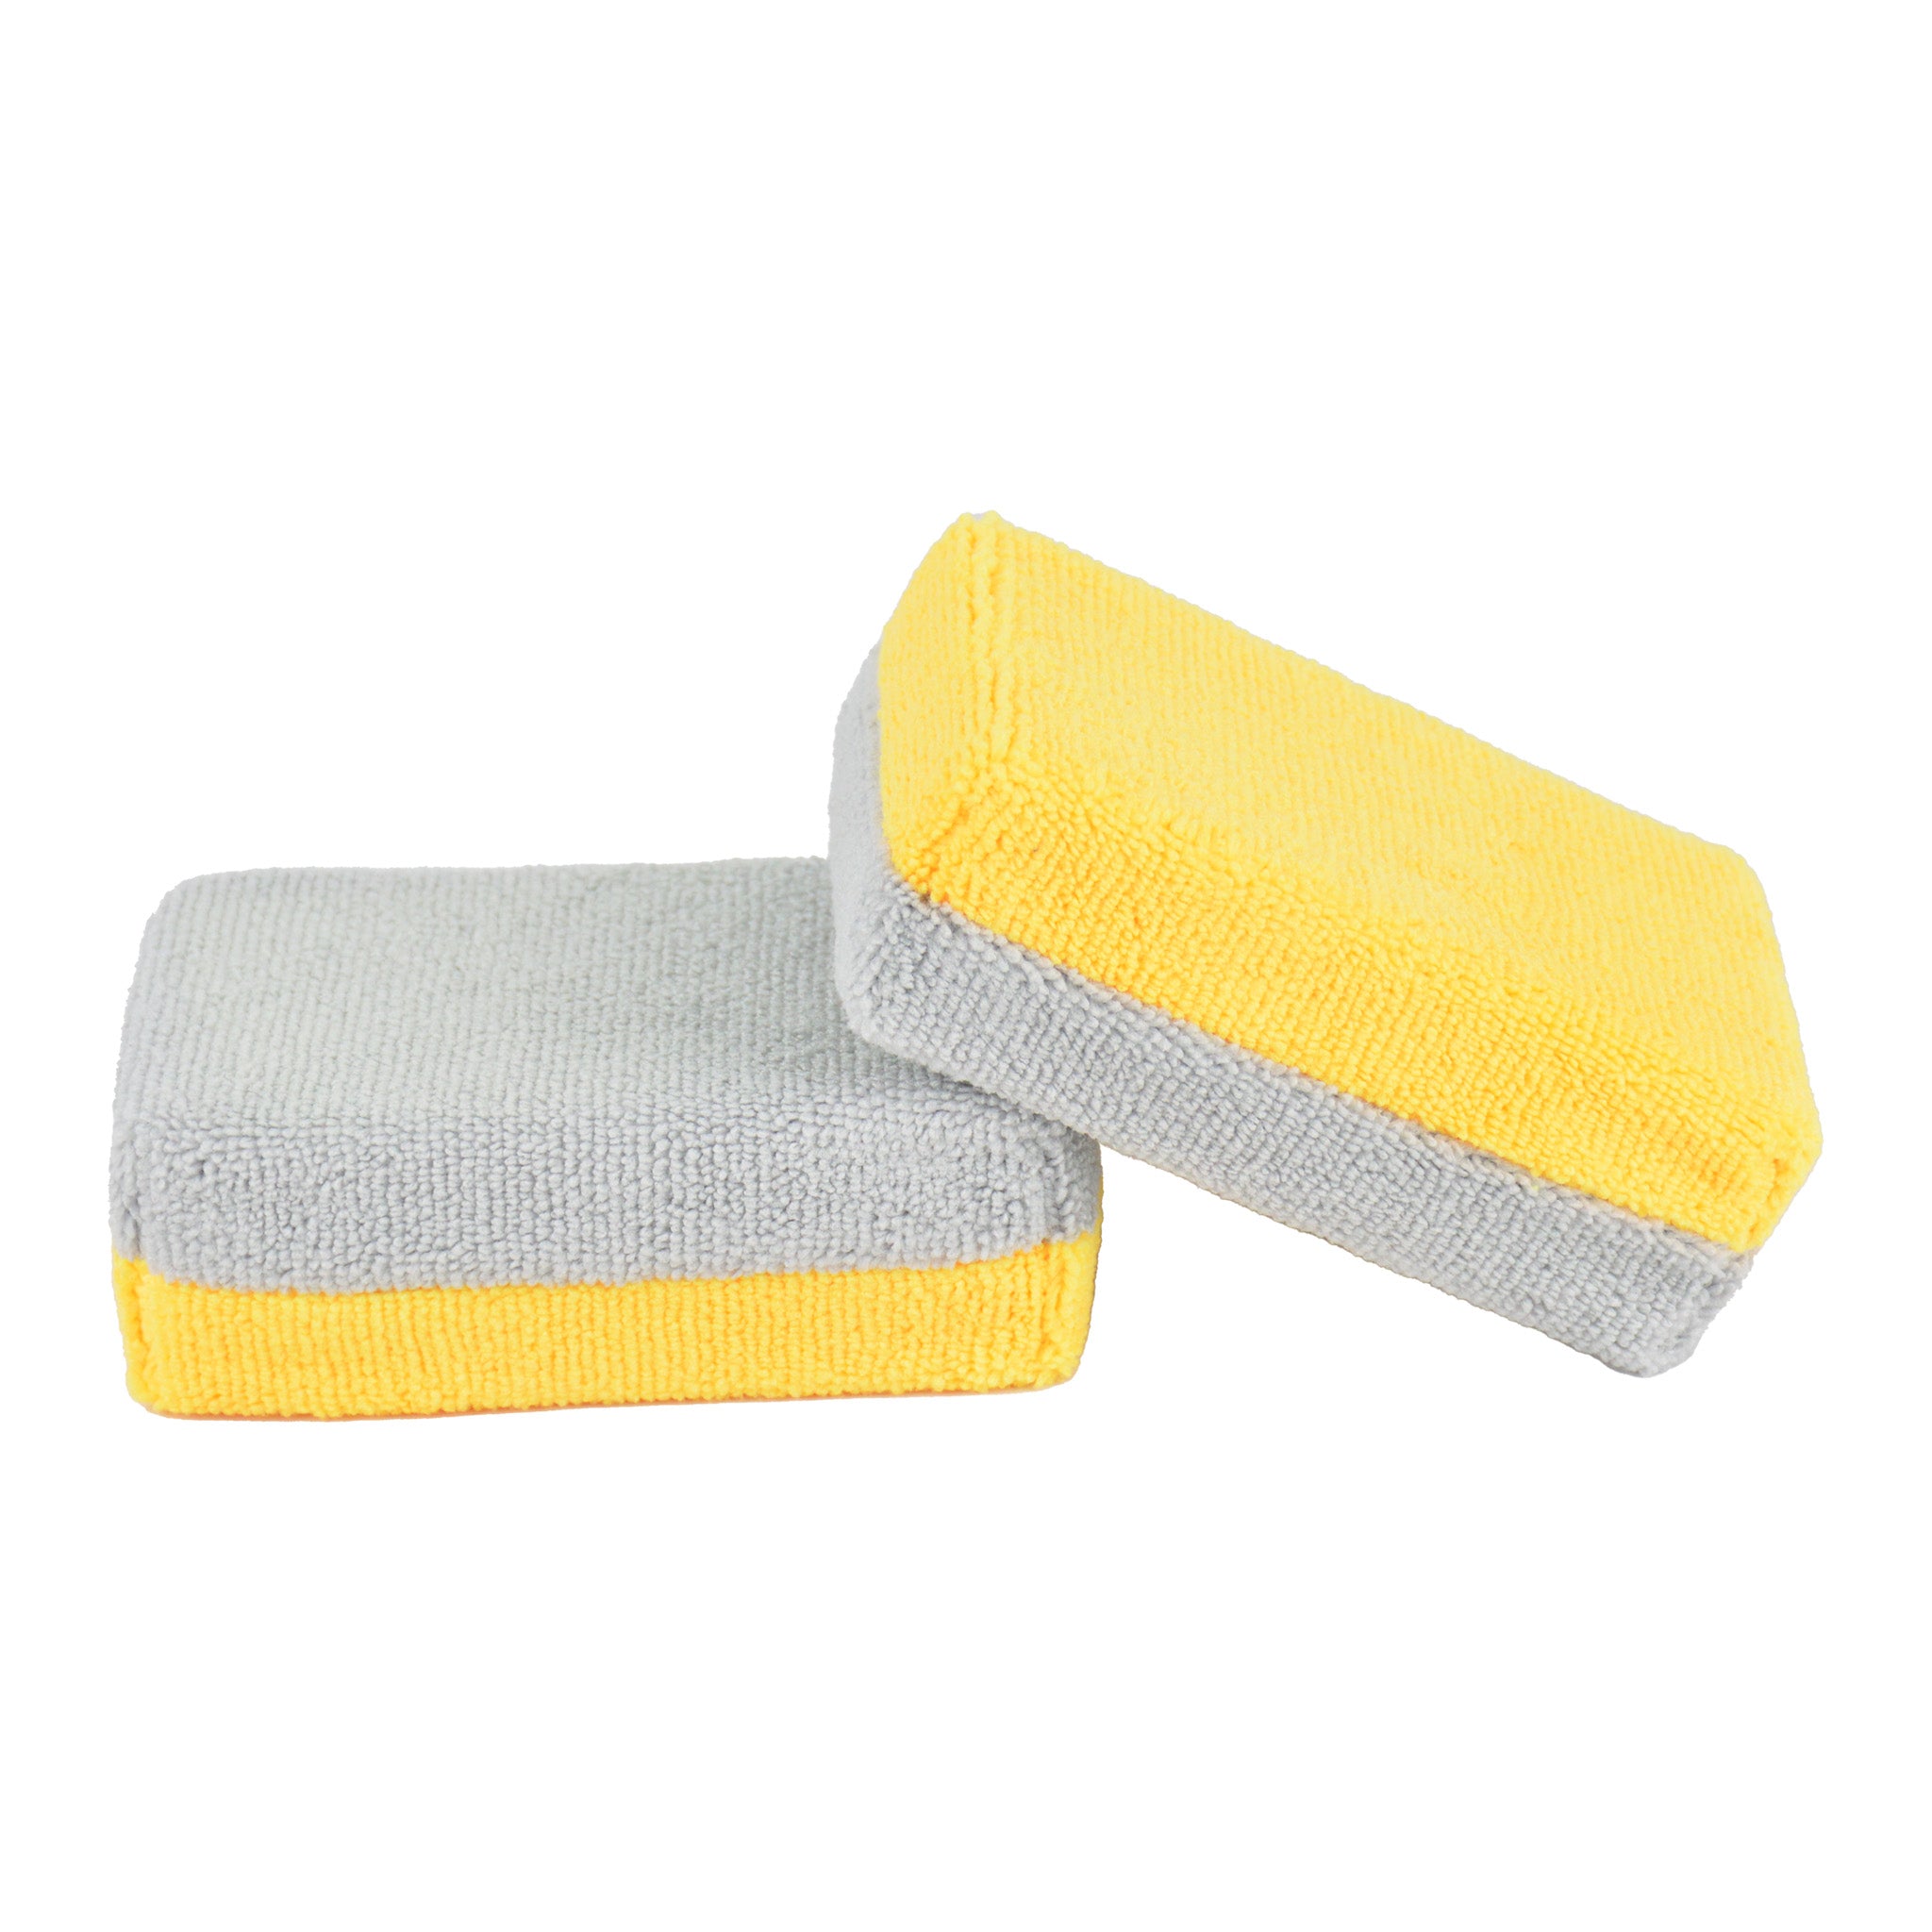 Ceramic Coating Applicator Cloth - Microfiber | Autofiber, Gray